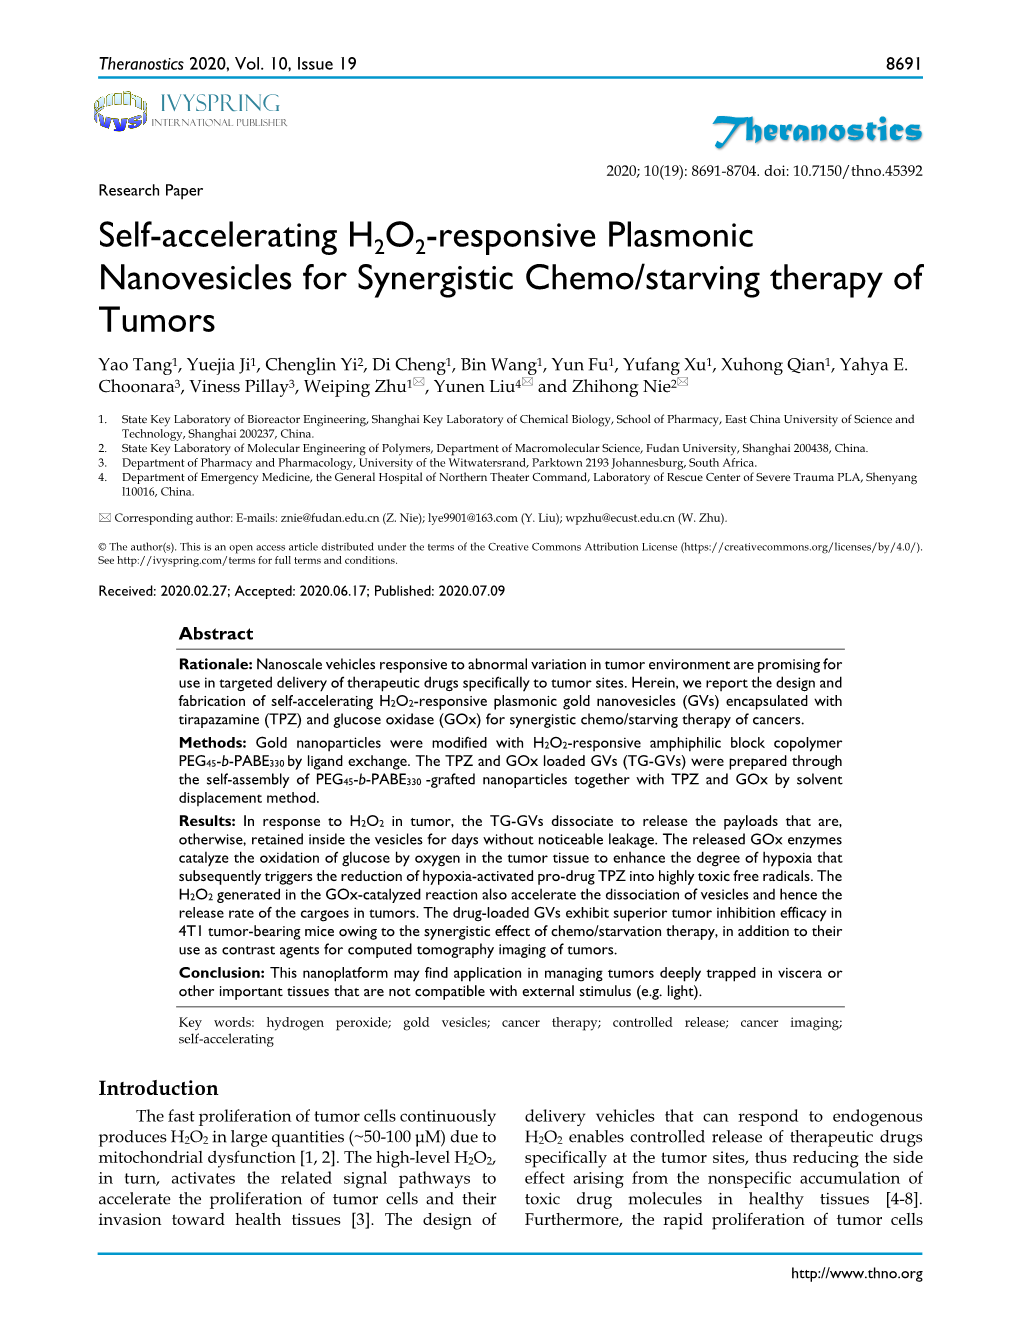 Theranostics Self-Accelerating H2O2-Responsive Plasmonic